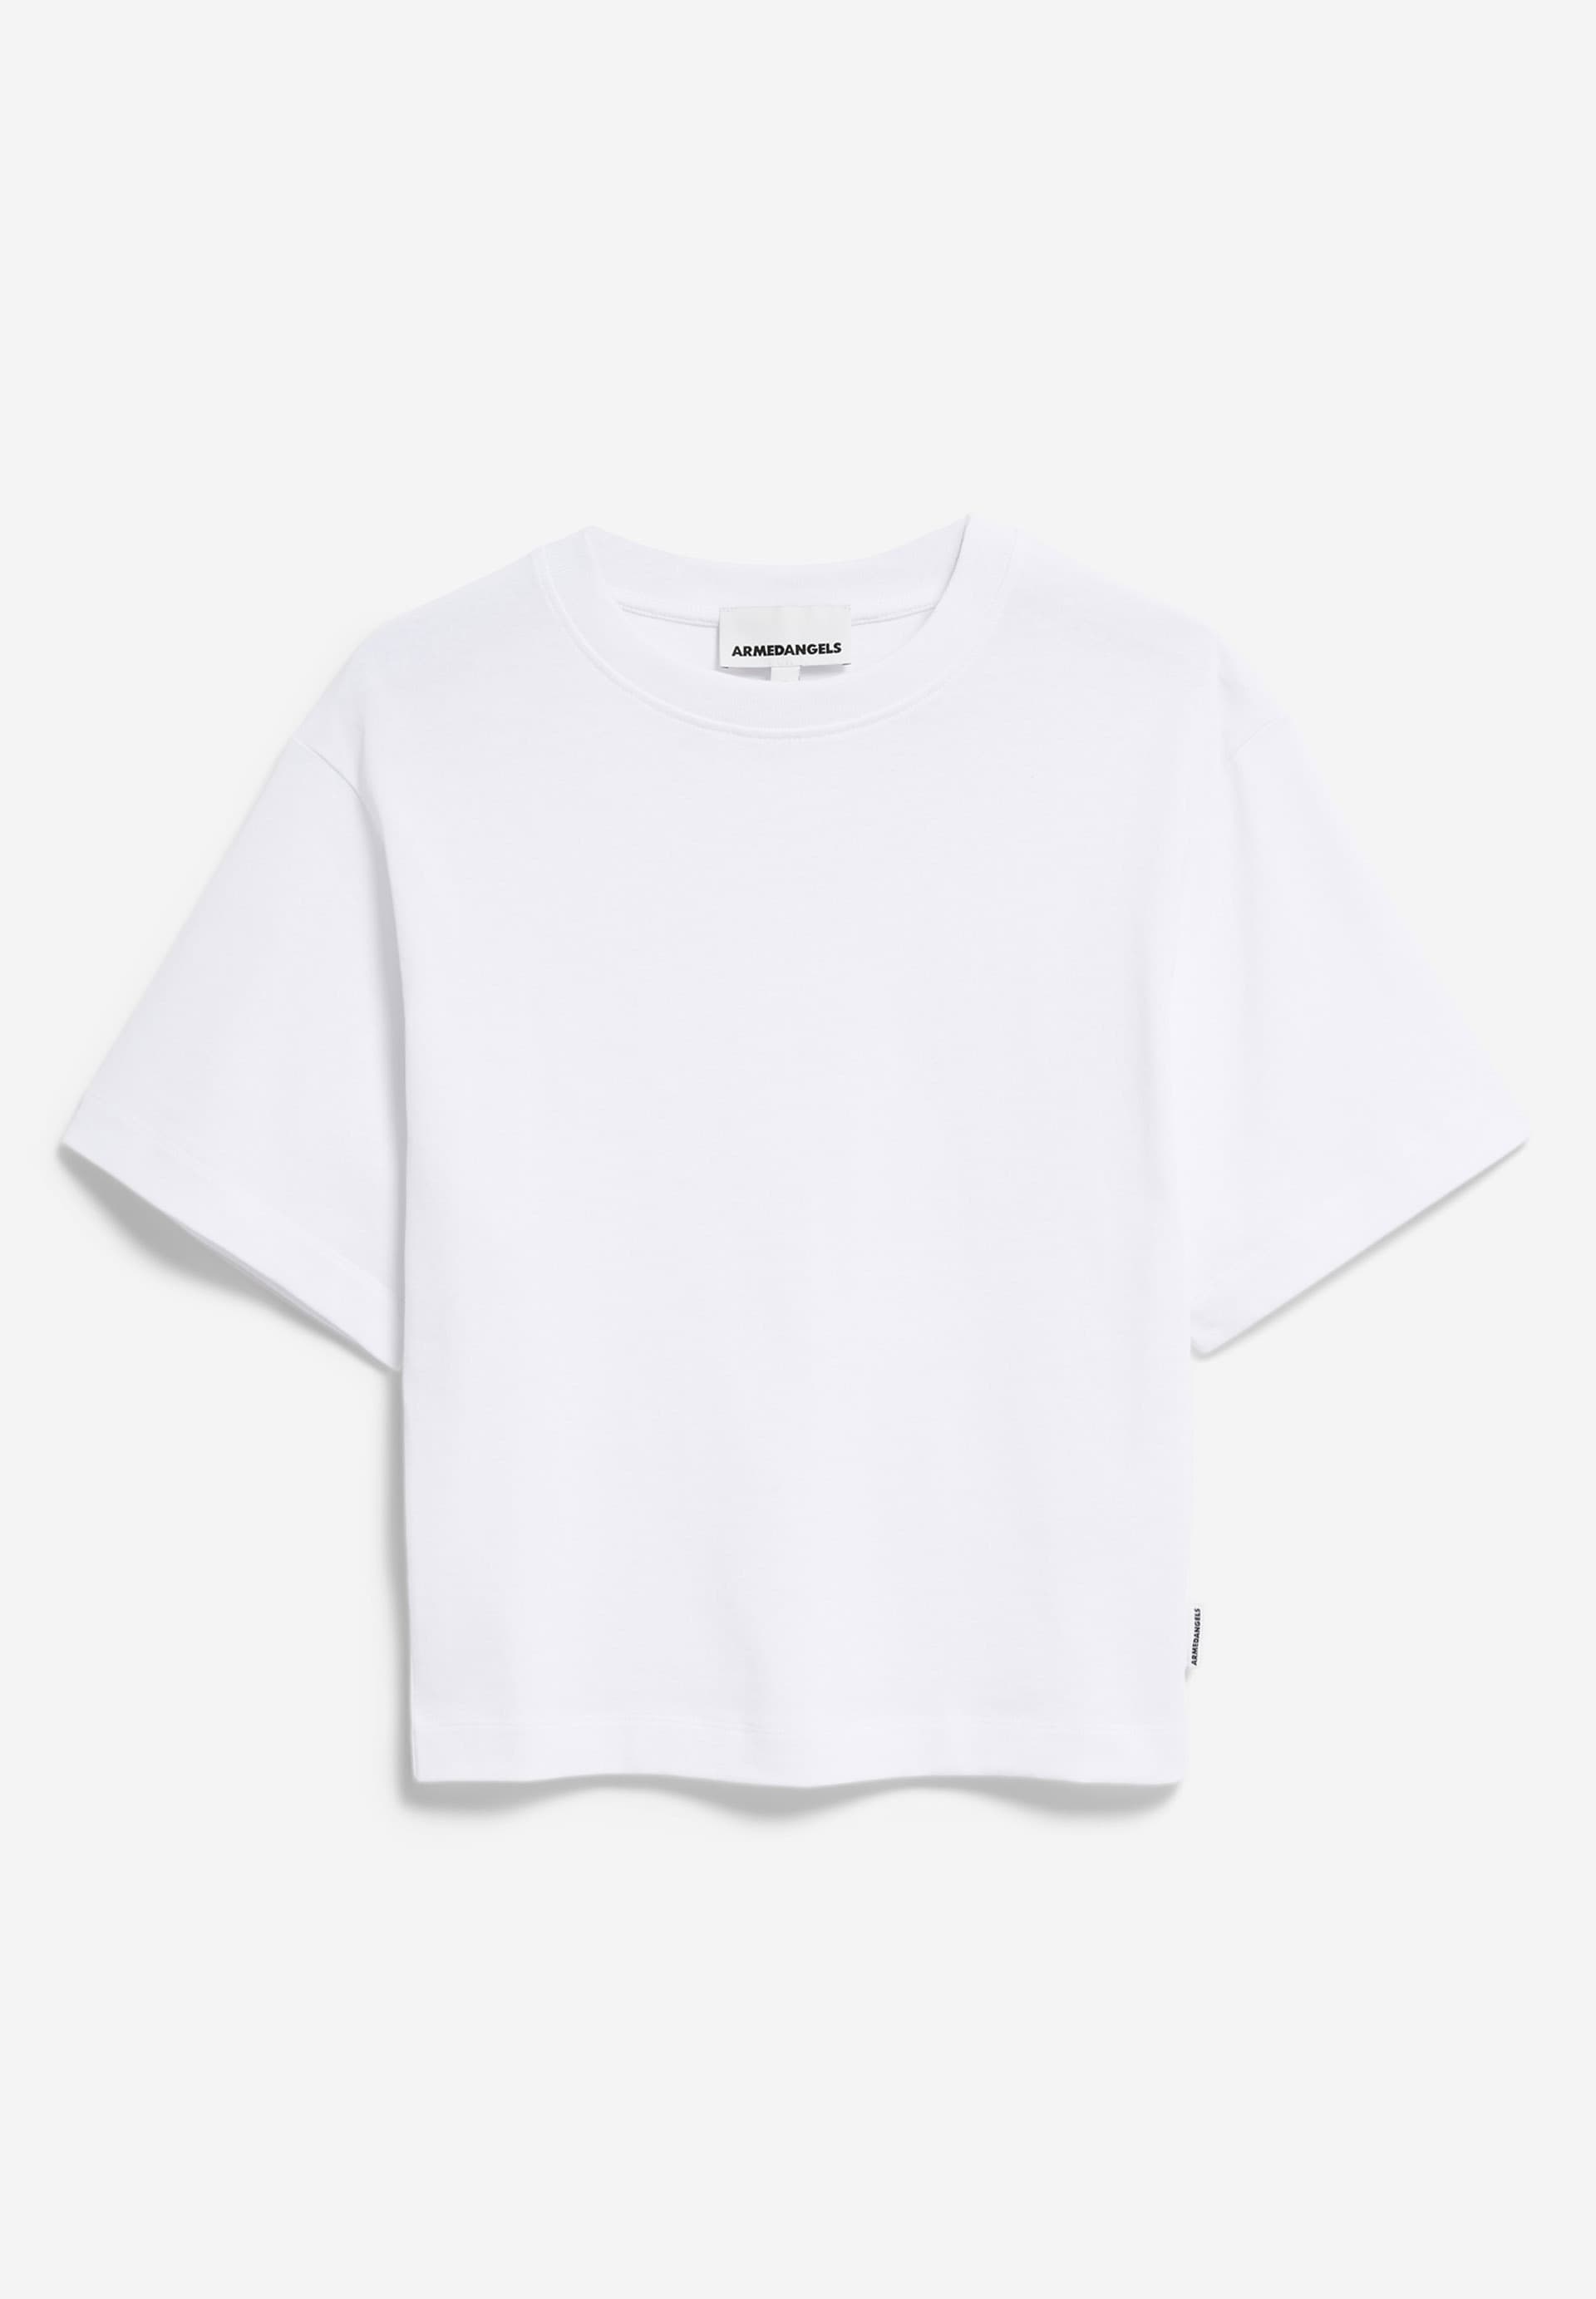 HERSILIAA Heavyweight T-Shirt Slim Fit made of Organic Cotton Mix